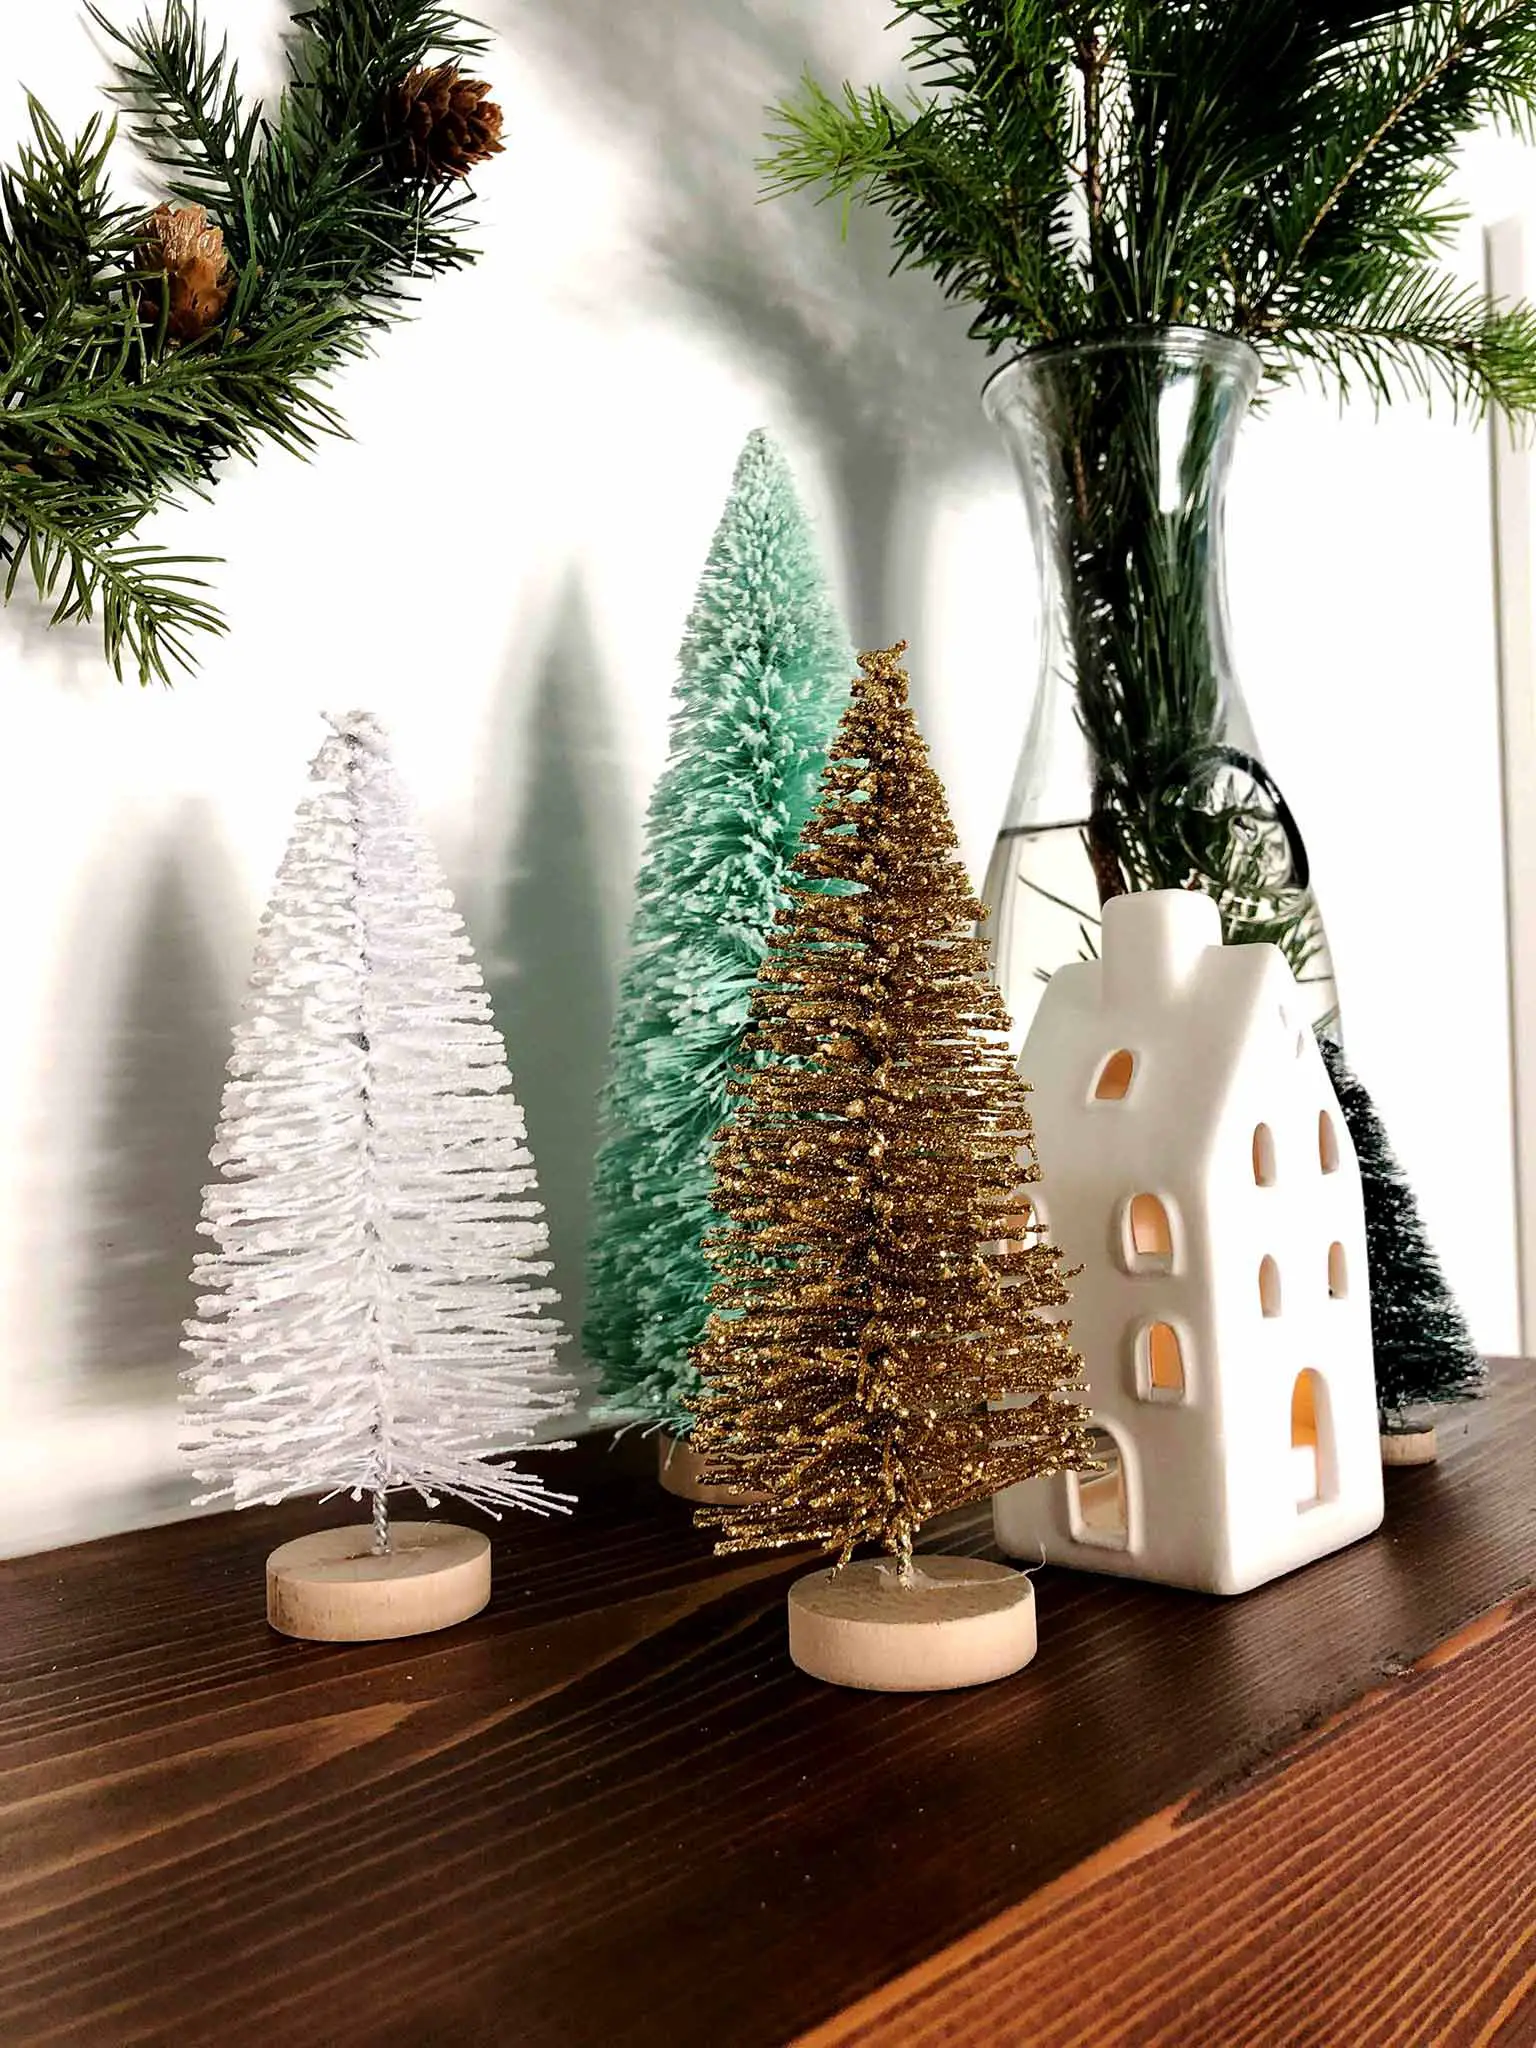 Mantel with bottle brush trees and ceramic house - Simple Yet Cozy Christmas Decor - That Homebird Life Blog #christmasdecor #christmasinspiration